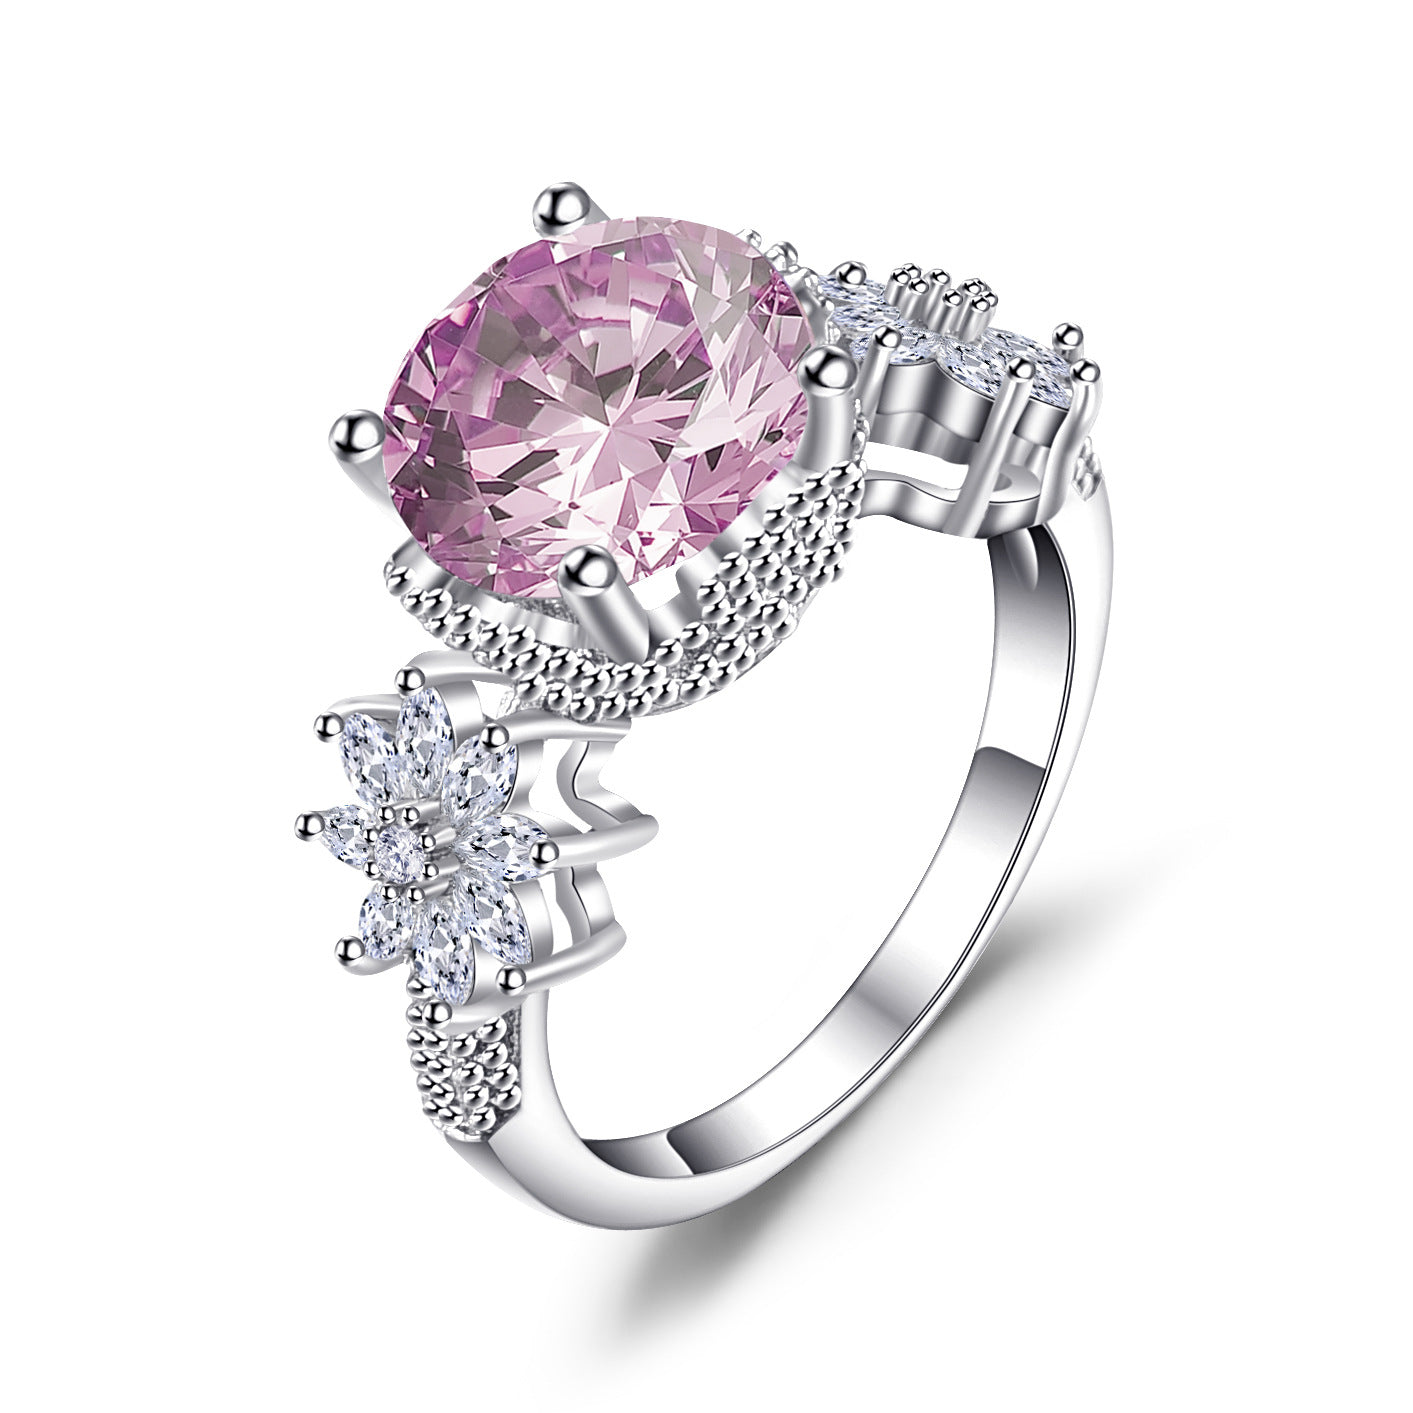 Creative diamond engagement ring for women